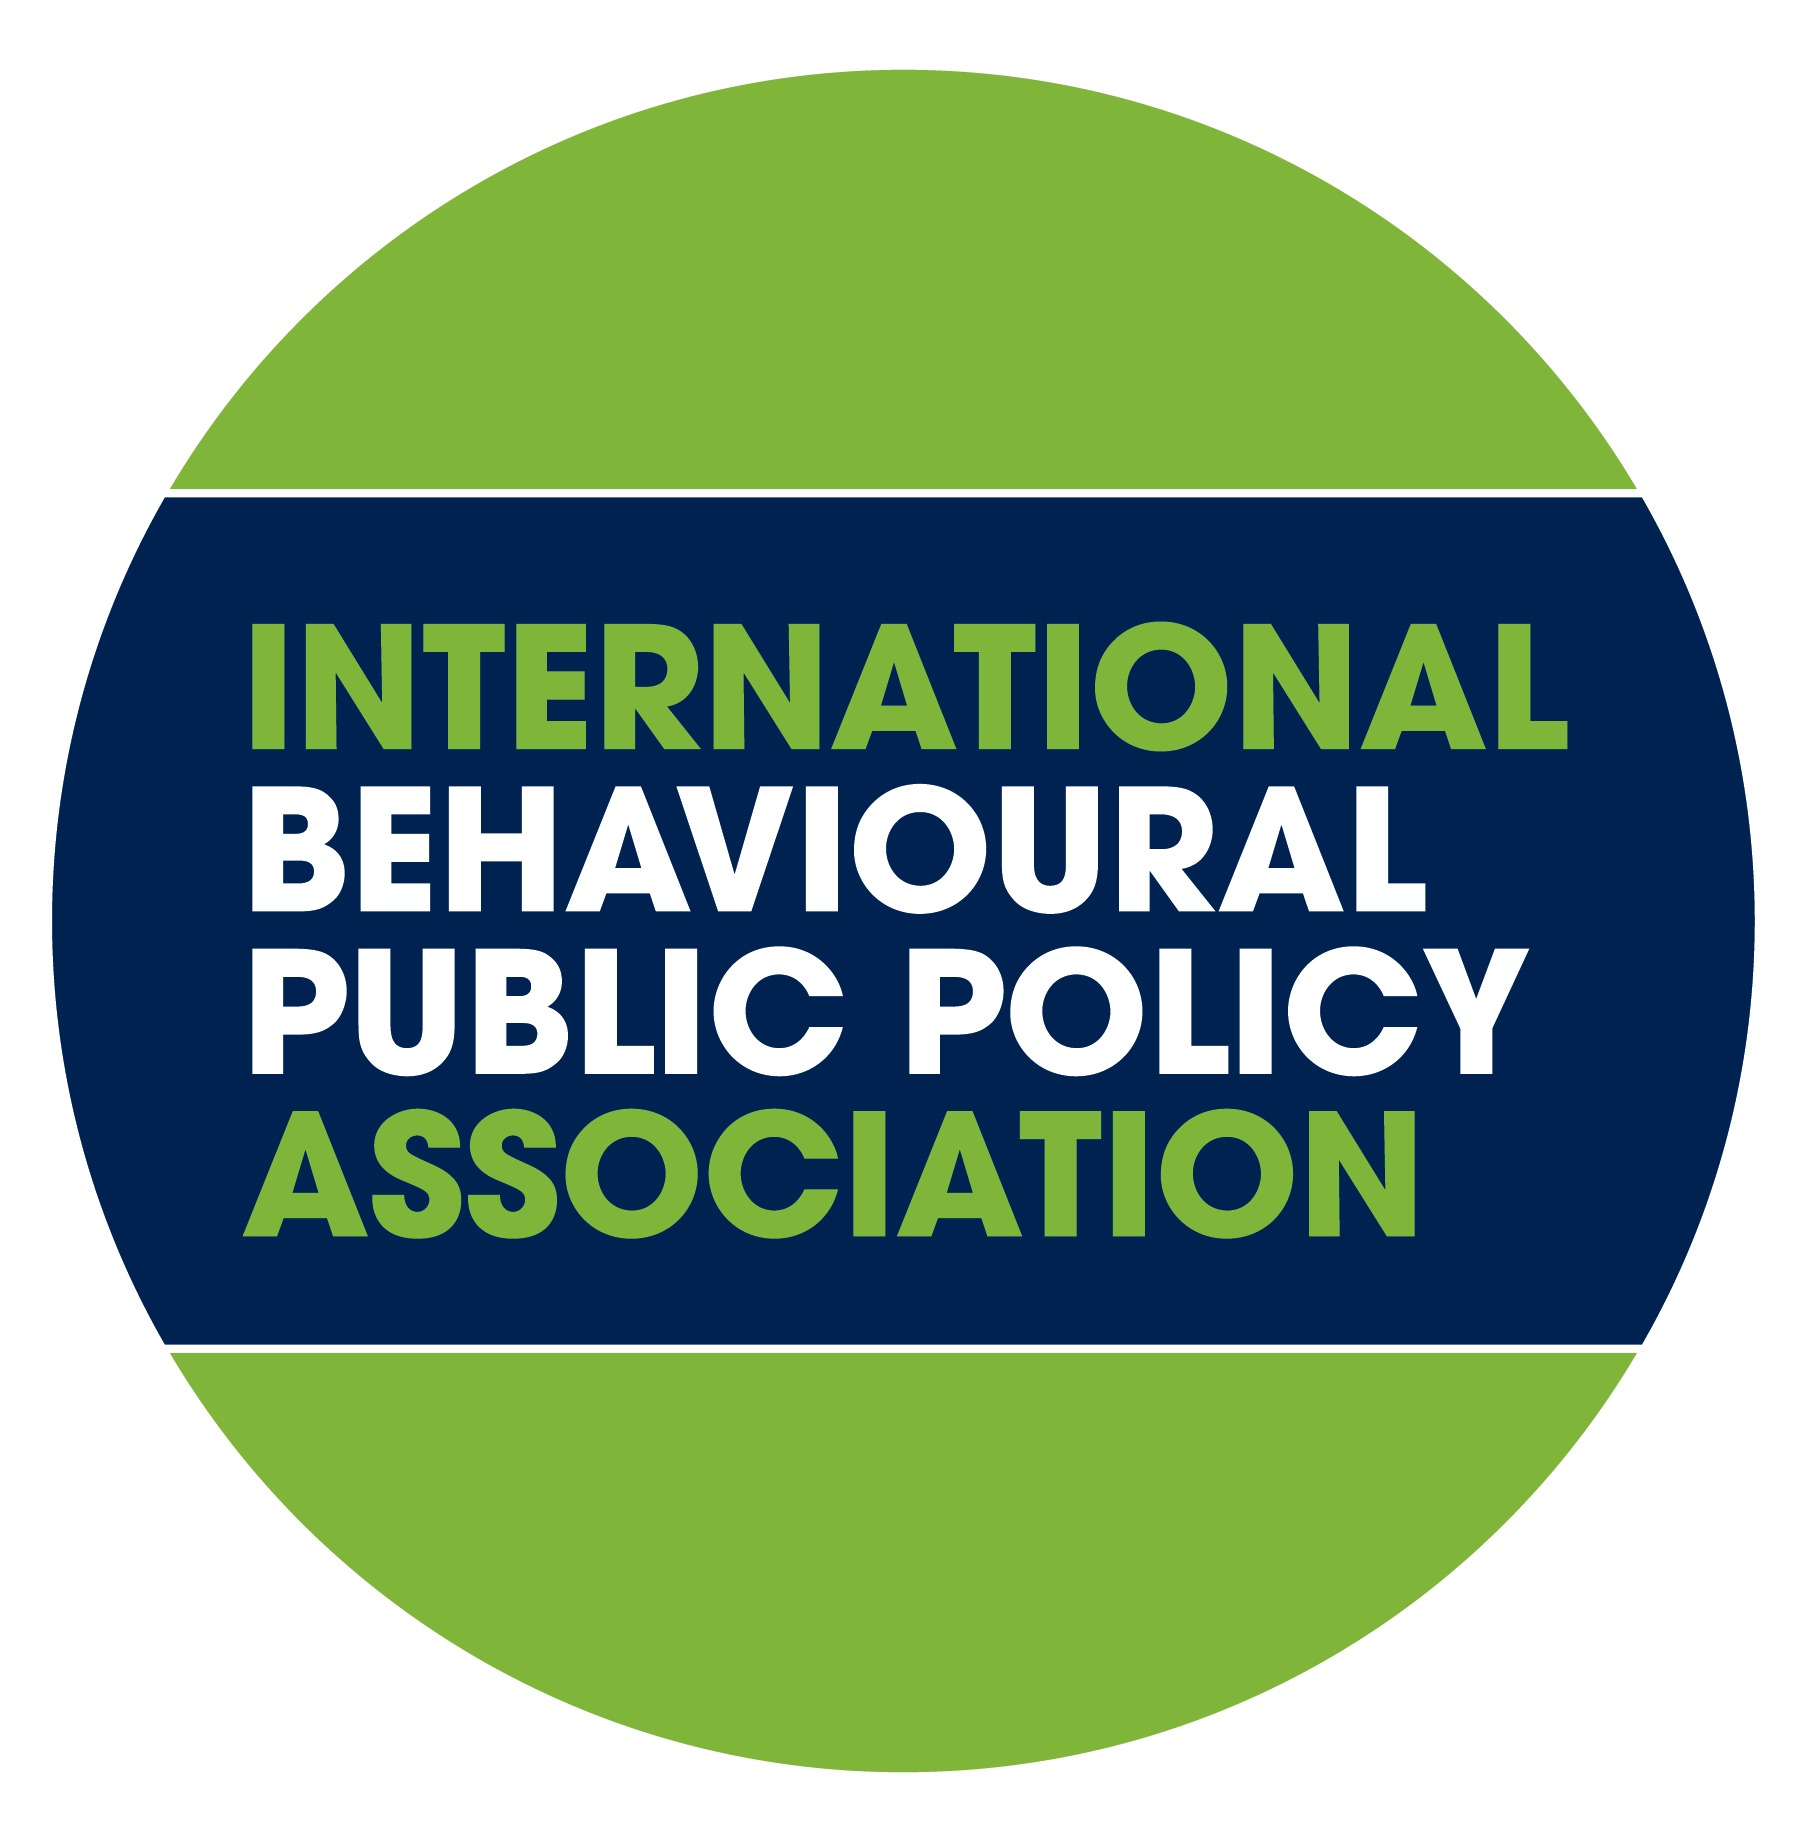 The International Behavioural Public Policy Association